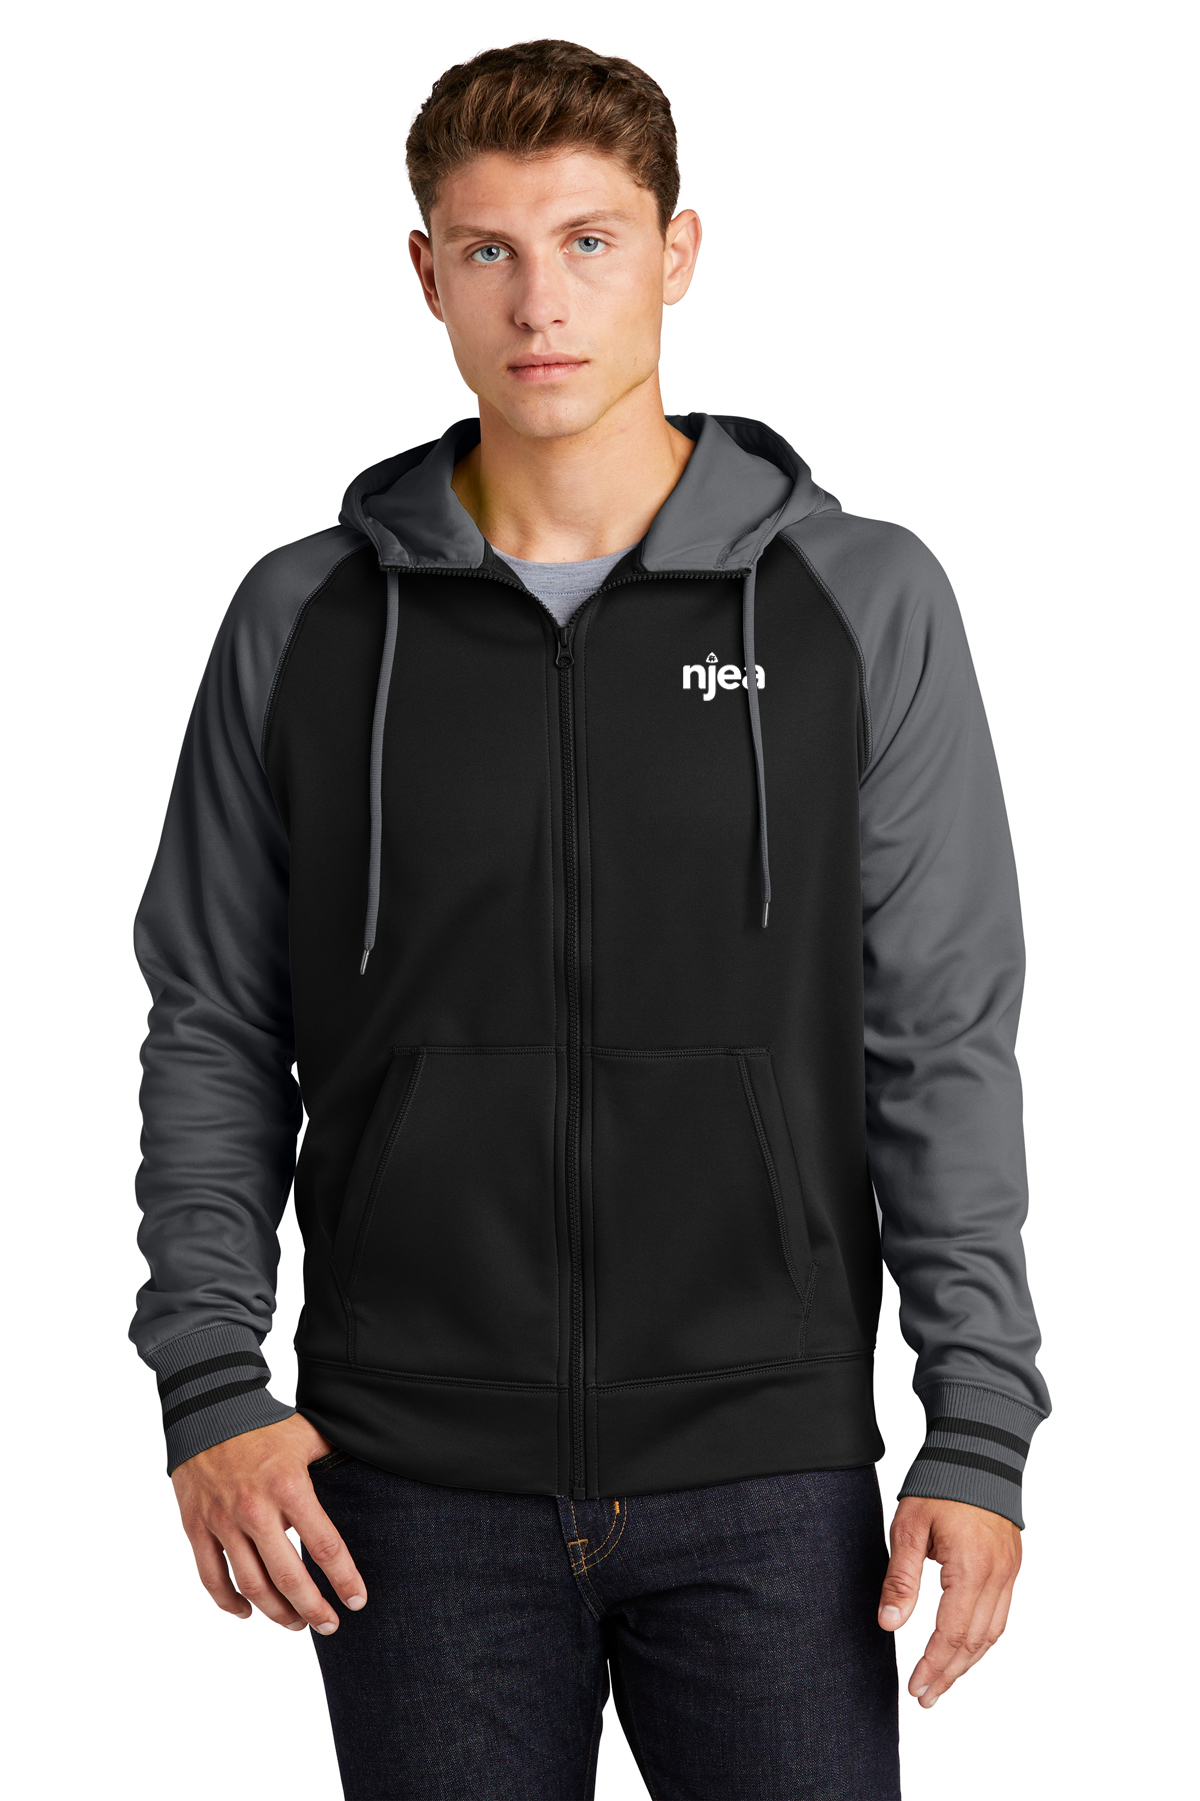 Sport-Tek® ST236 - Sport-Wick® Varsity Fleece Full-Zip Hooded Jacket